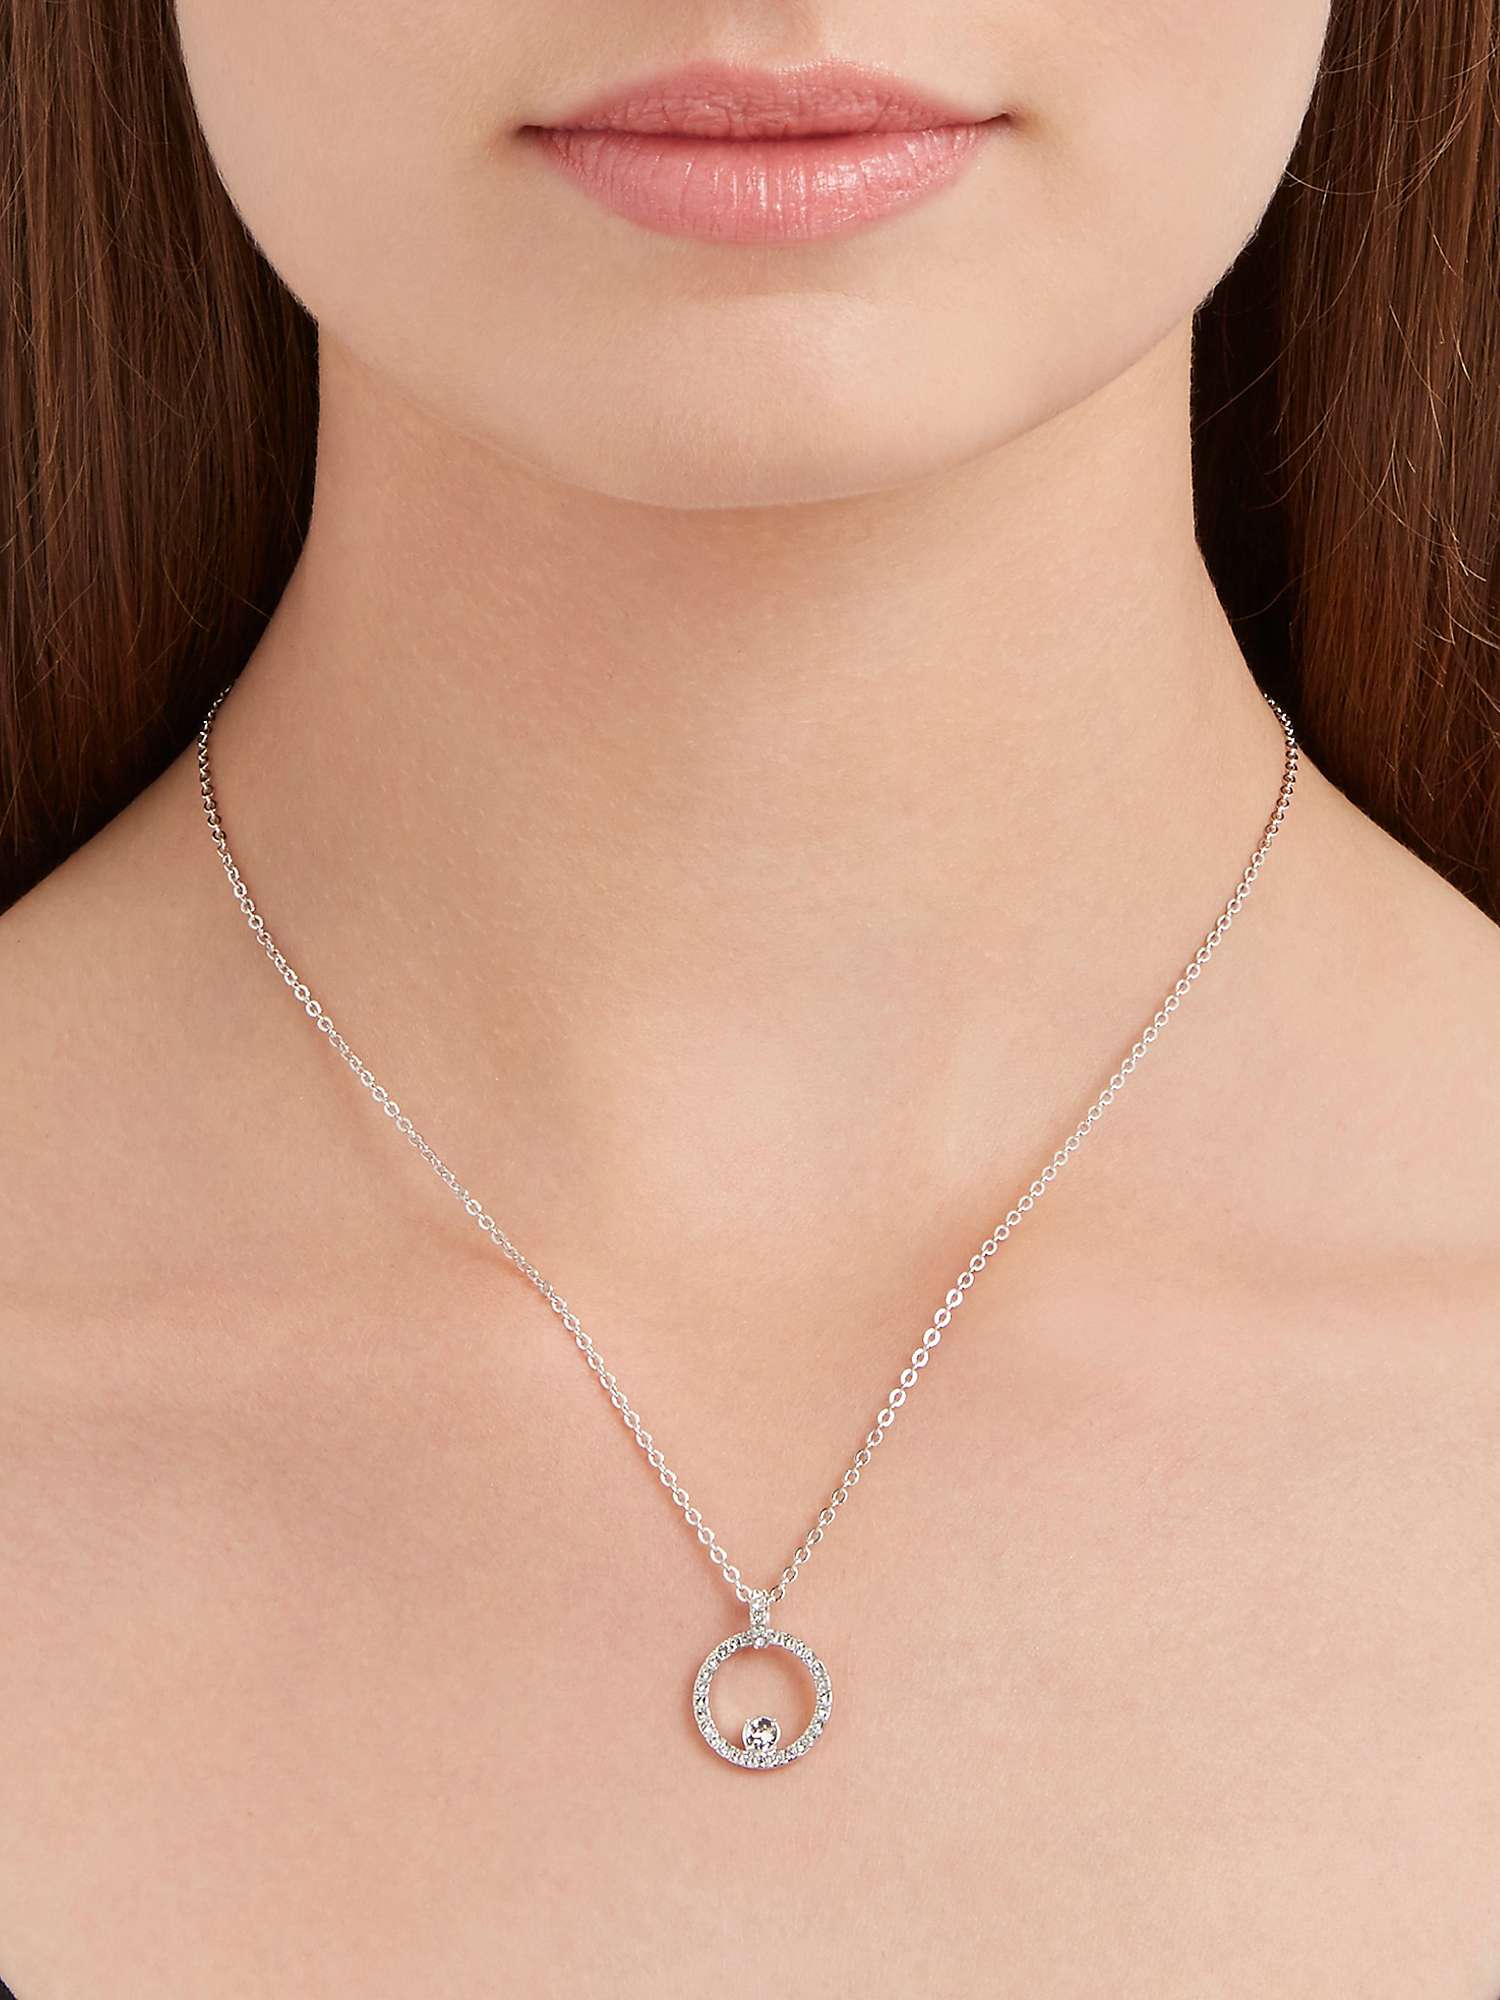 Buy Swarovski Creativity Crystal Pave Round Pendant Necklace Online at johnlewis.com